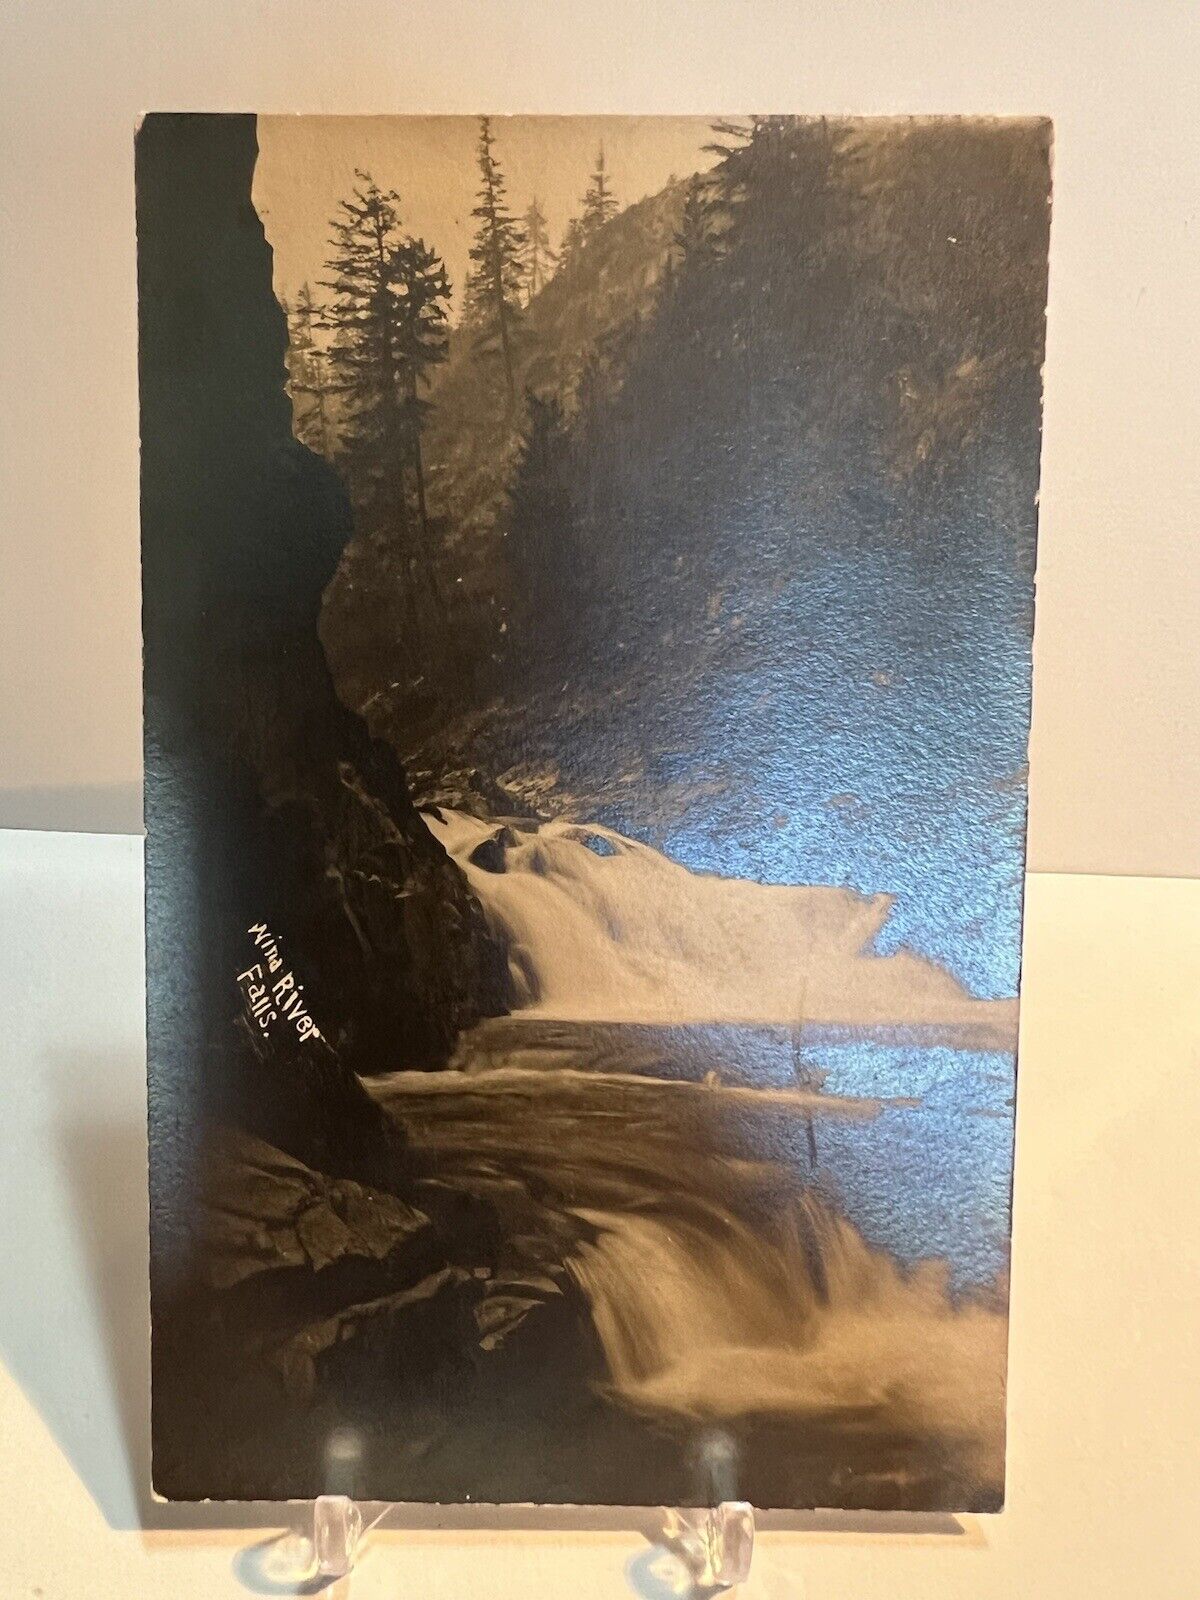 RPPC “Wind River Falls” Vintage Postcard